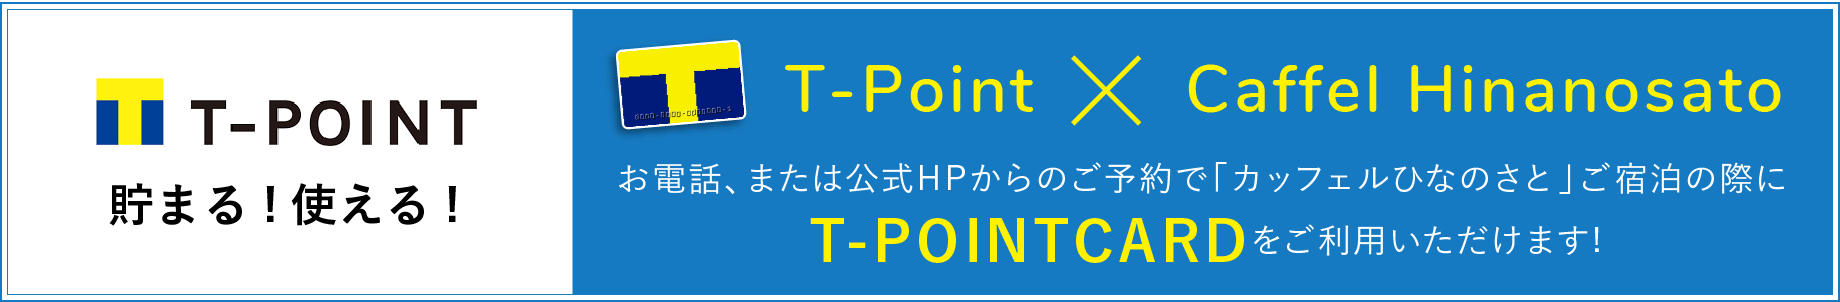 Tpoint